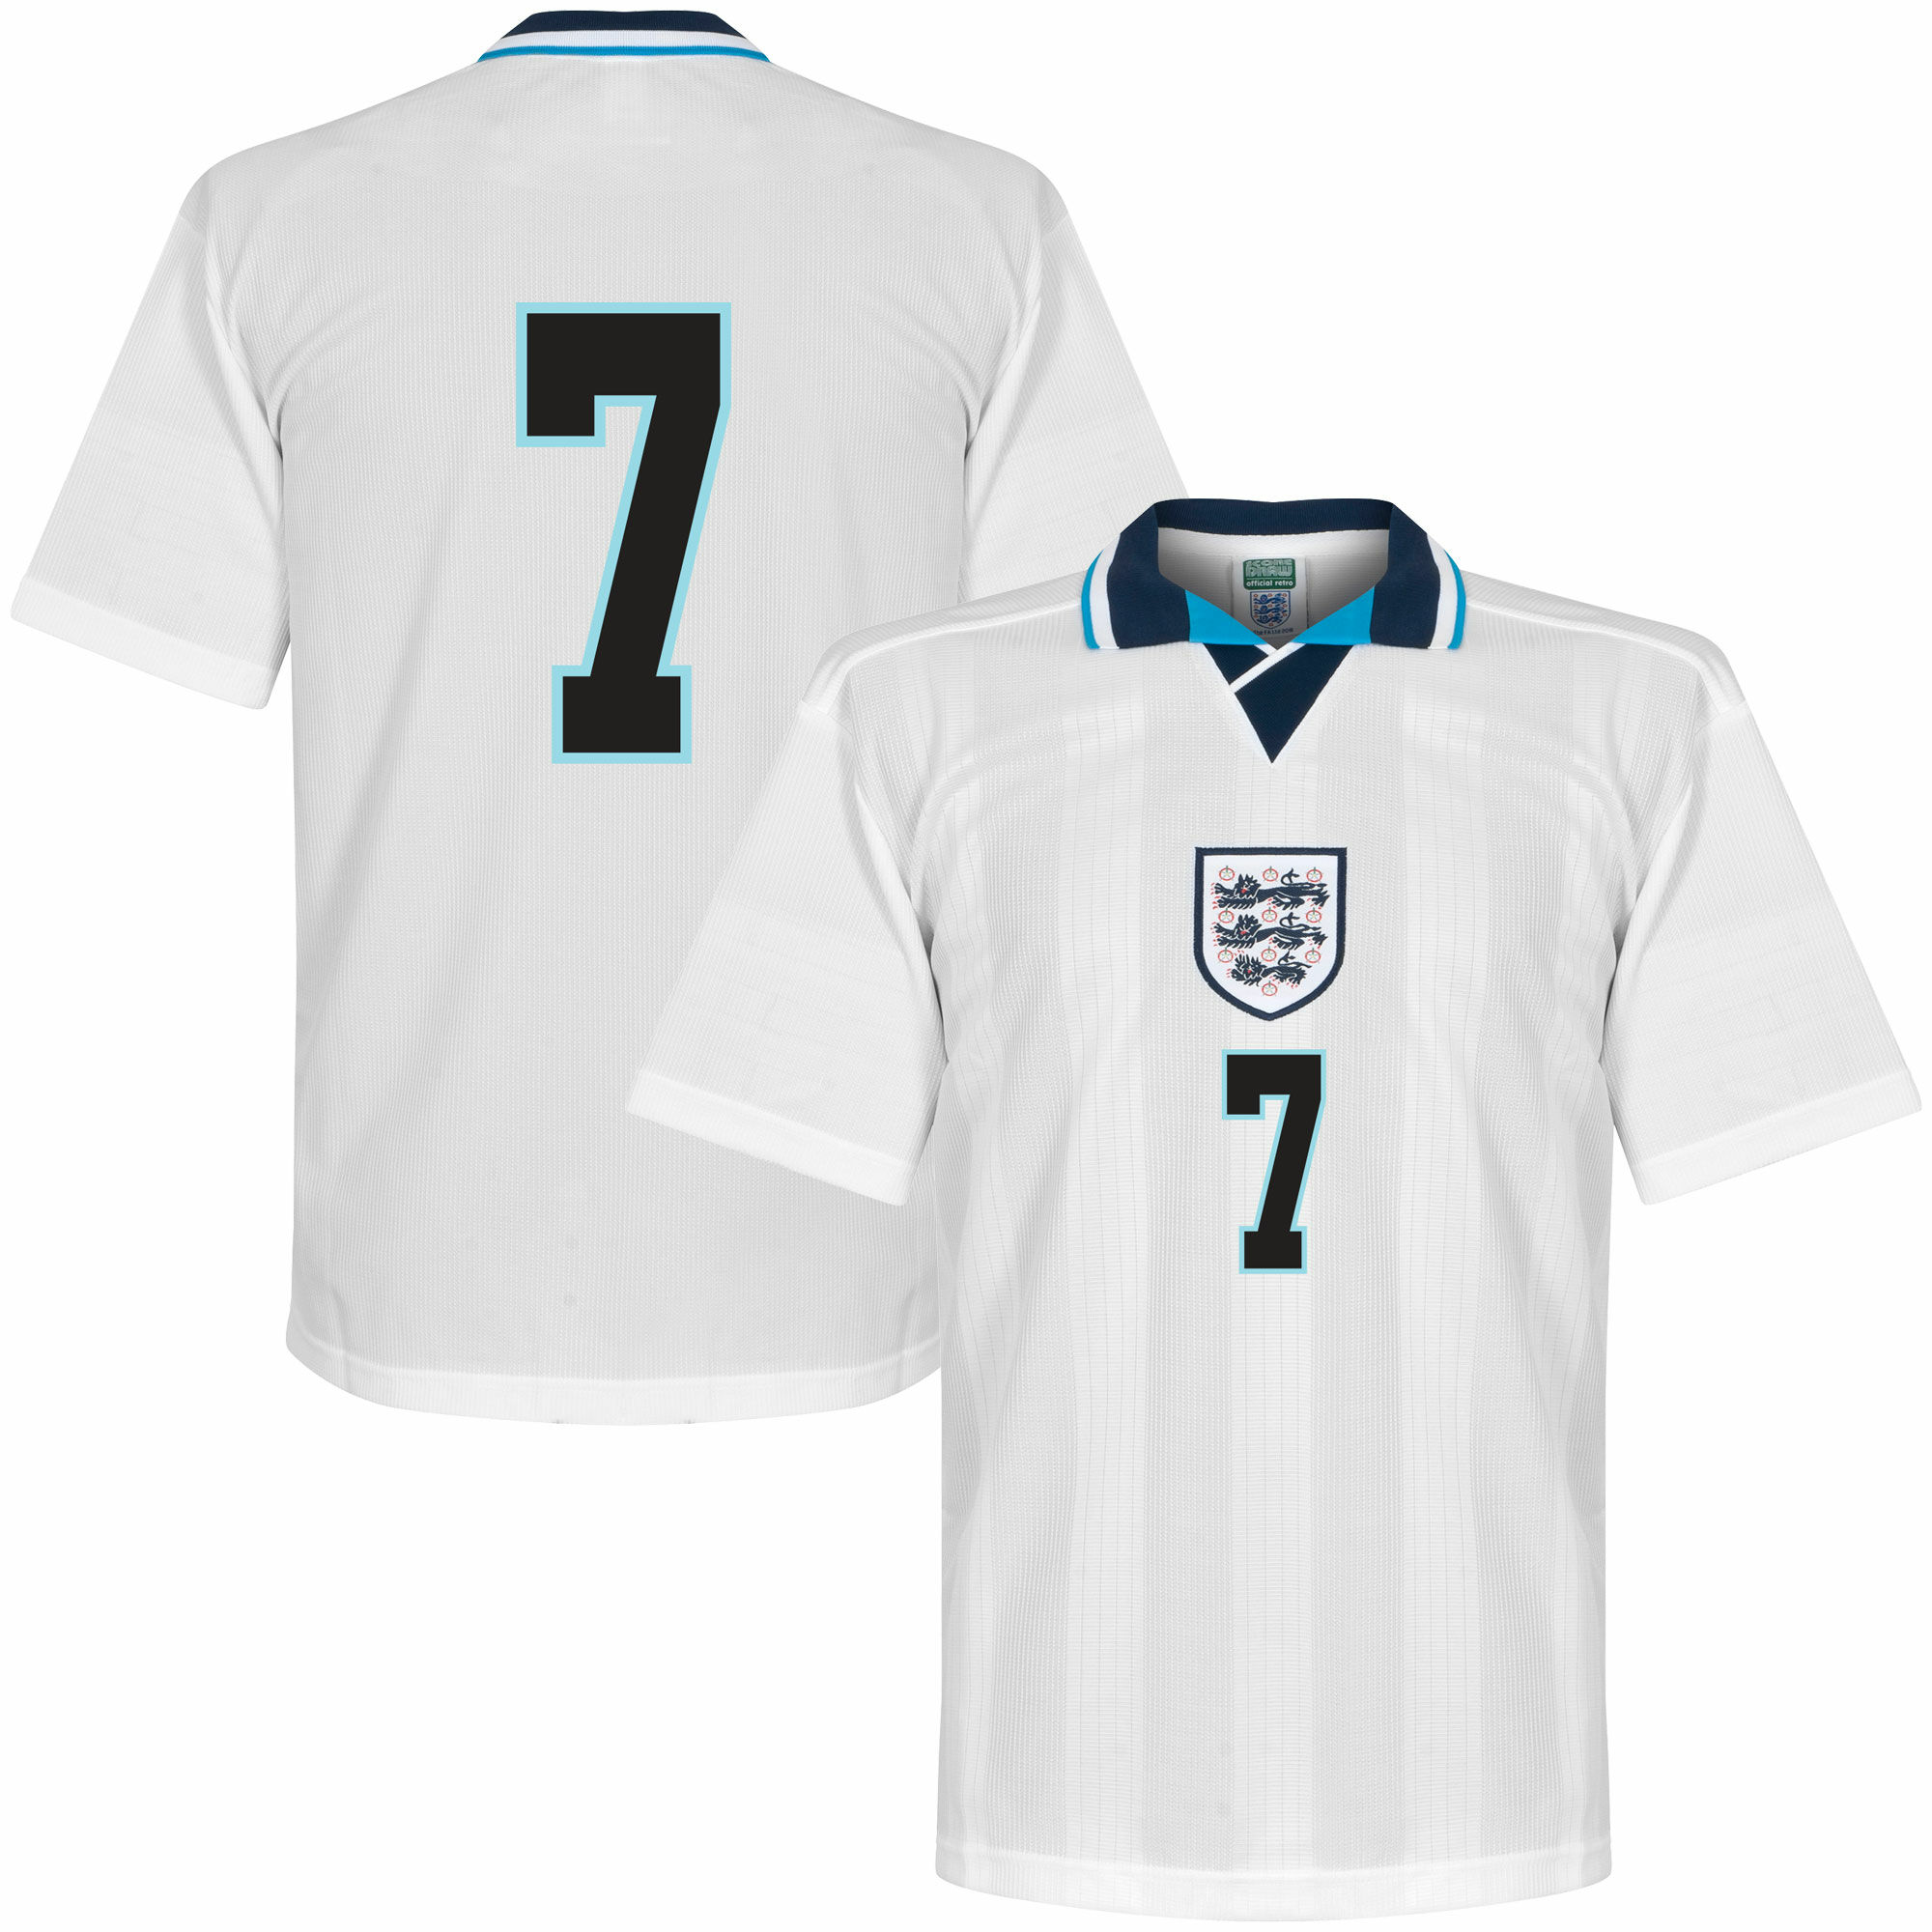 Anglie - Dres fotbalový - 1996, bílý, retrostyl, retro potisk, domácí, David Beckham